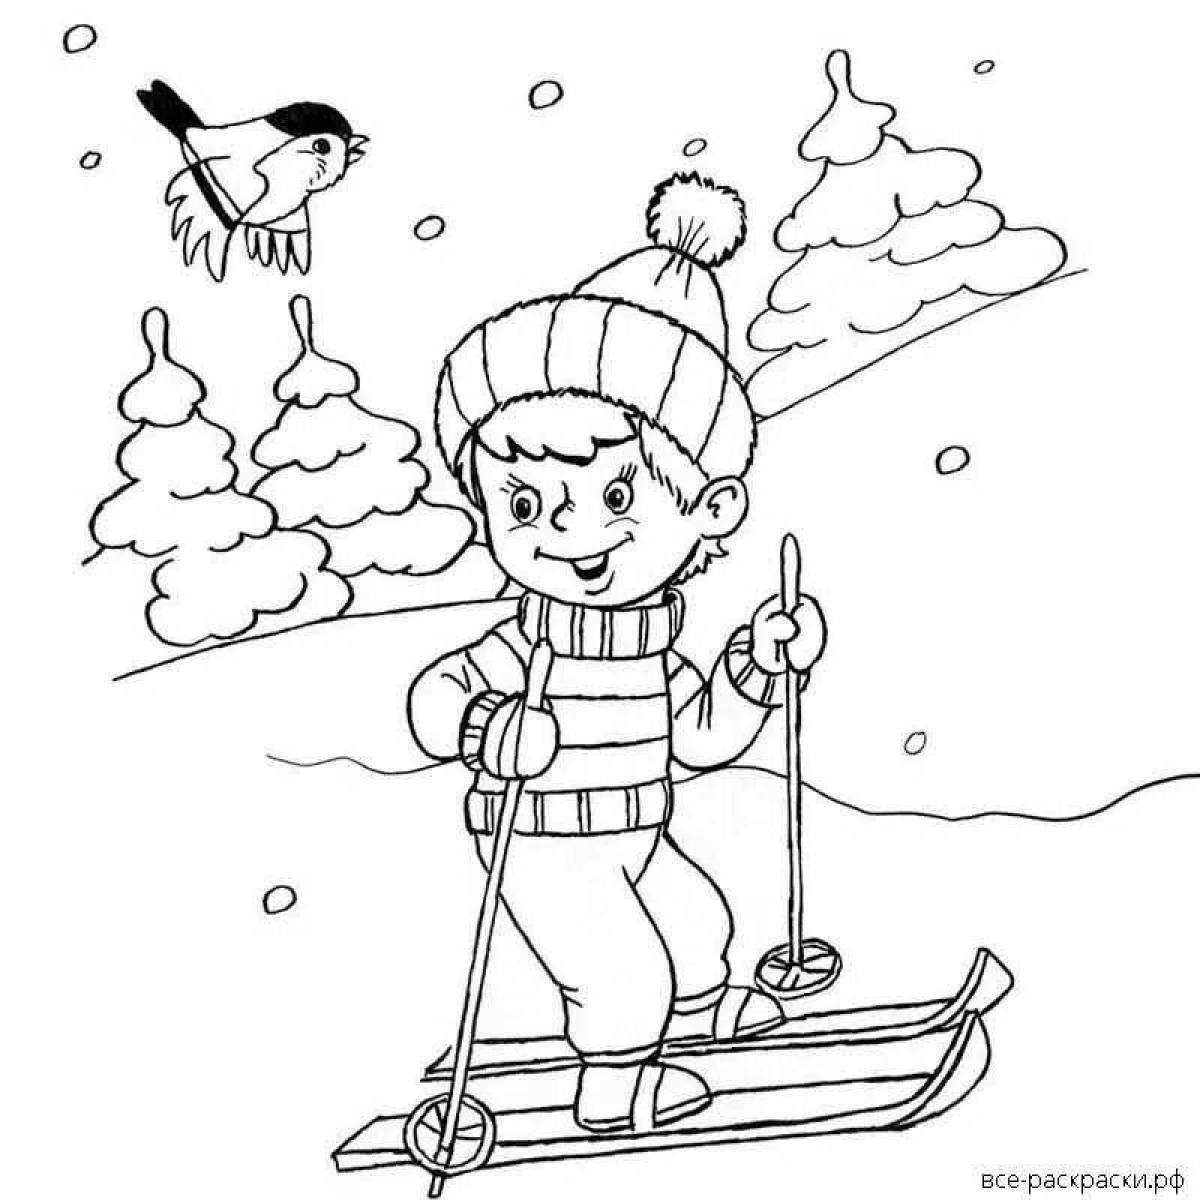 Color-explosion winter fun coloring page